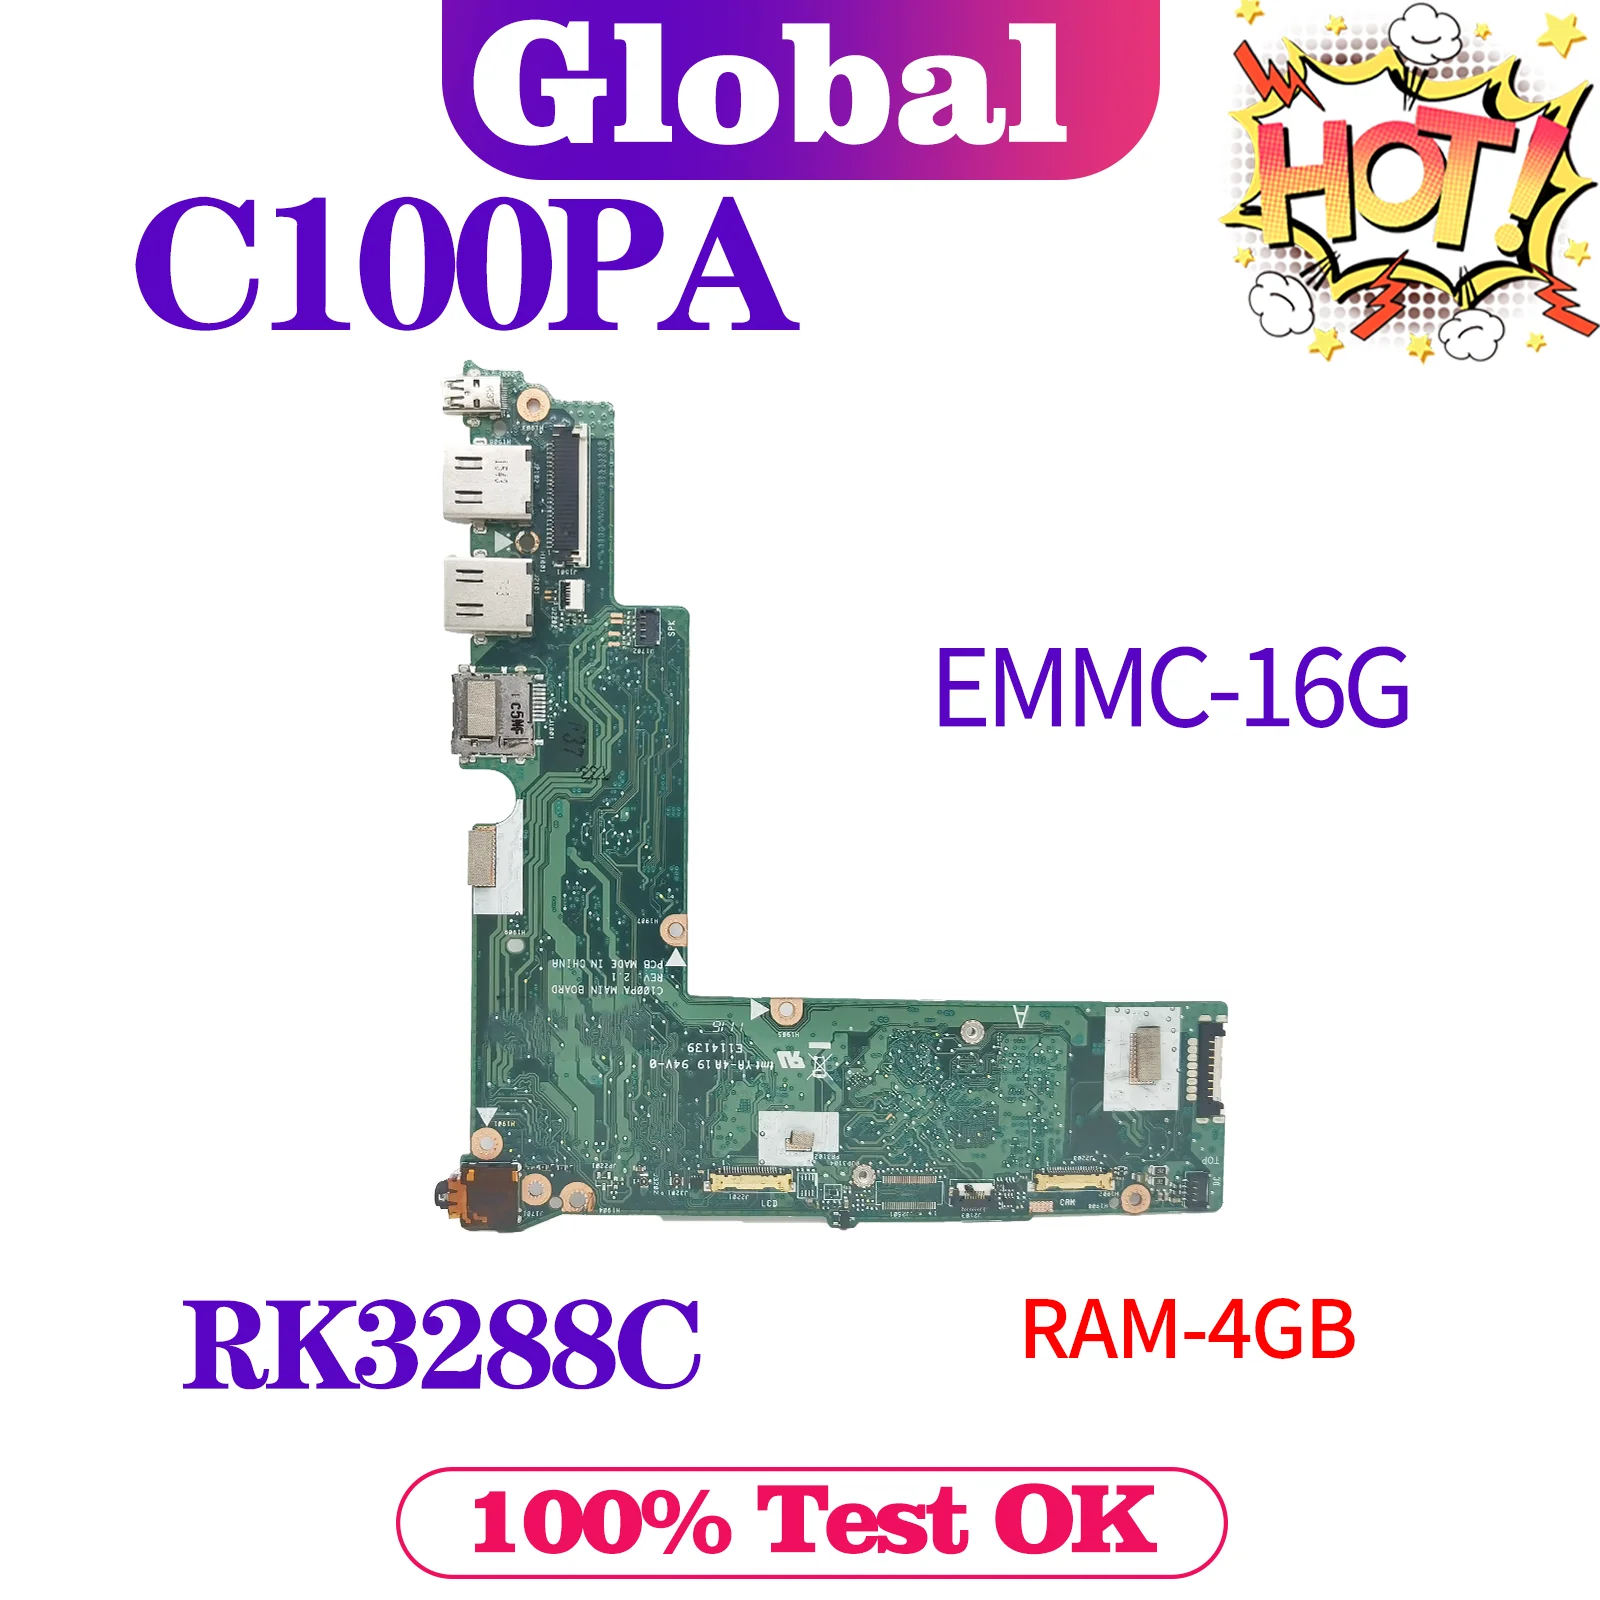 

KEFU Notebook C100PA Mainboard For ASUS Chromebook Flip C100 C100P Laptop Motherboard CPU RK3288C 2GB/RAM EMMC-16G